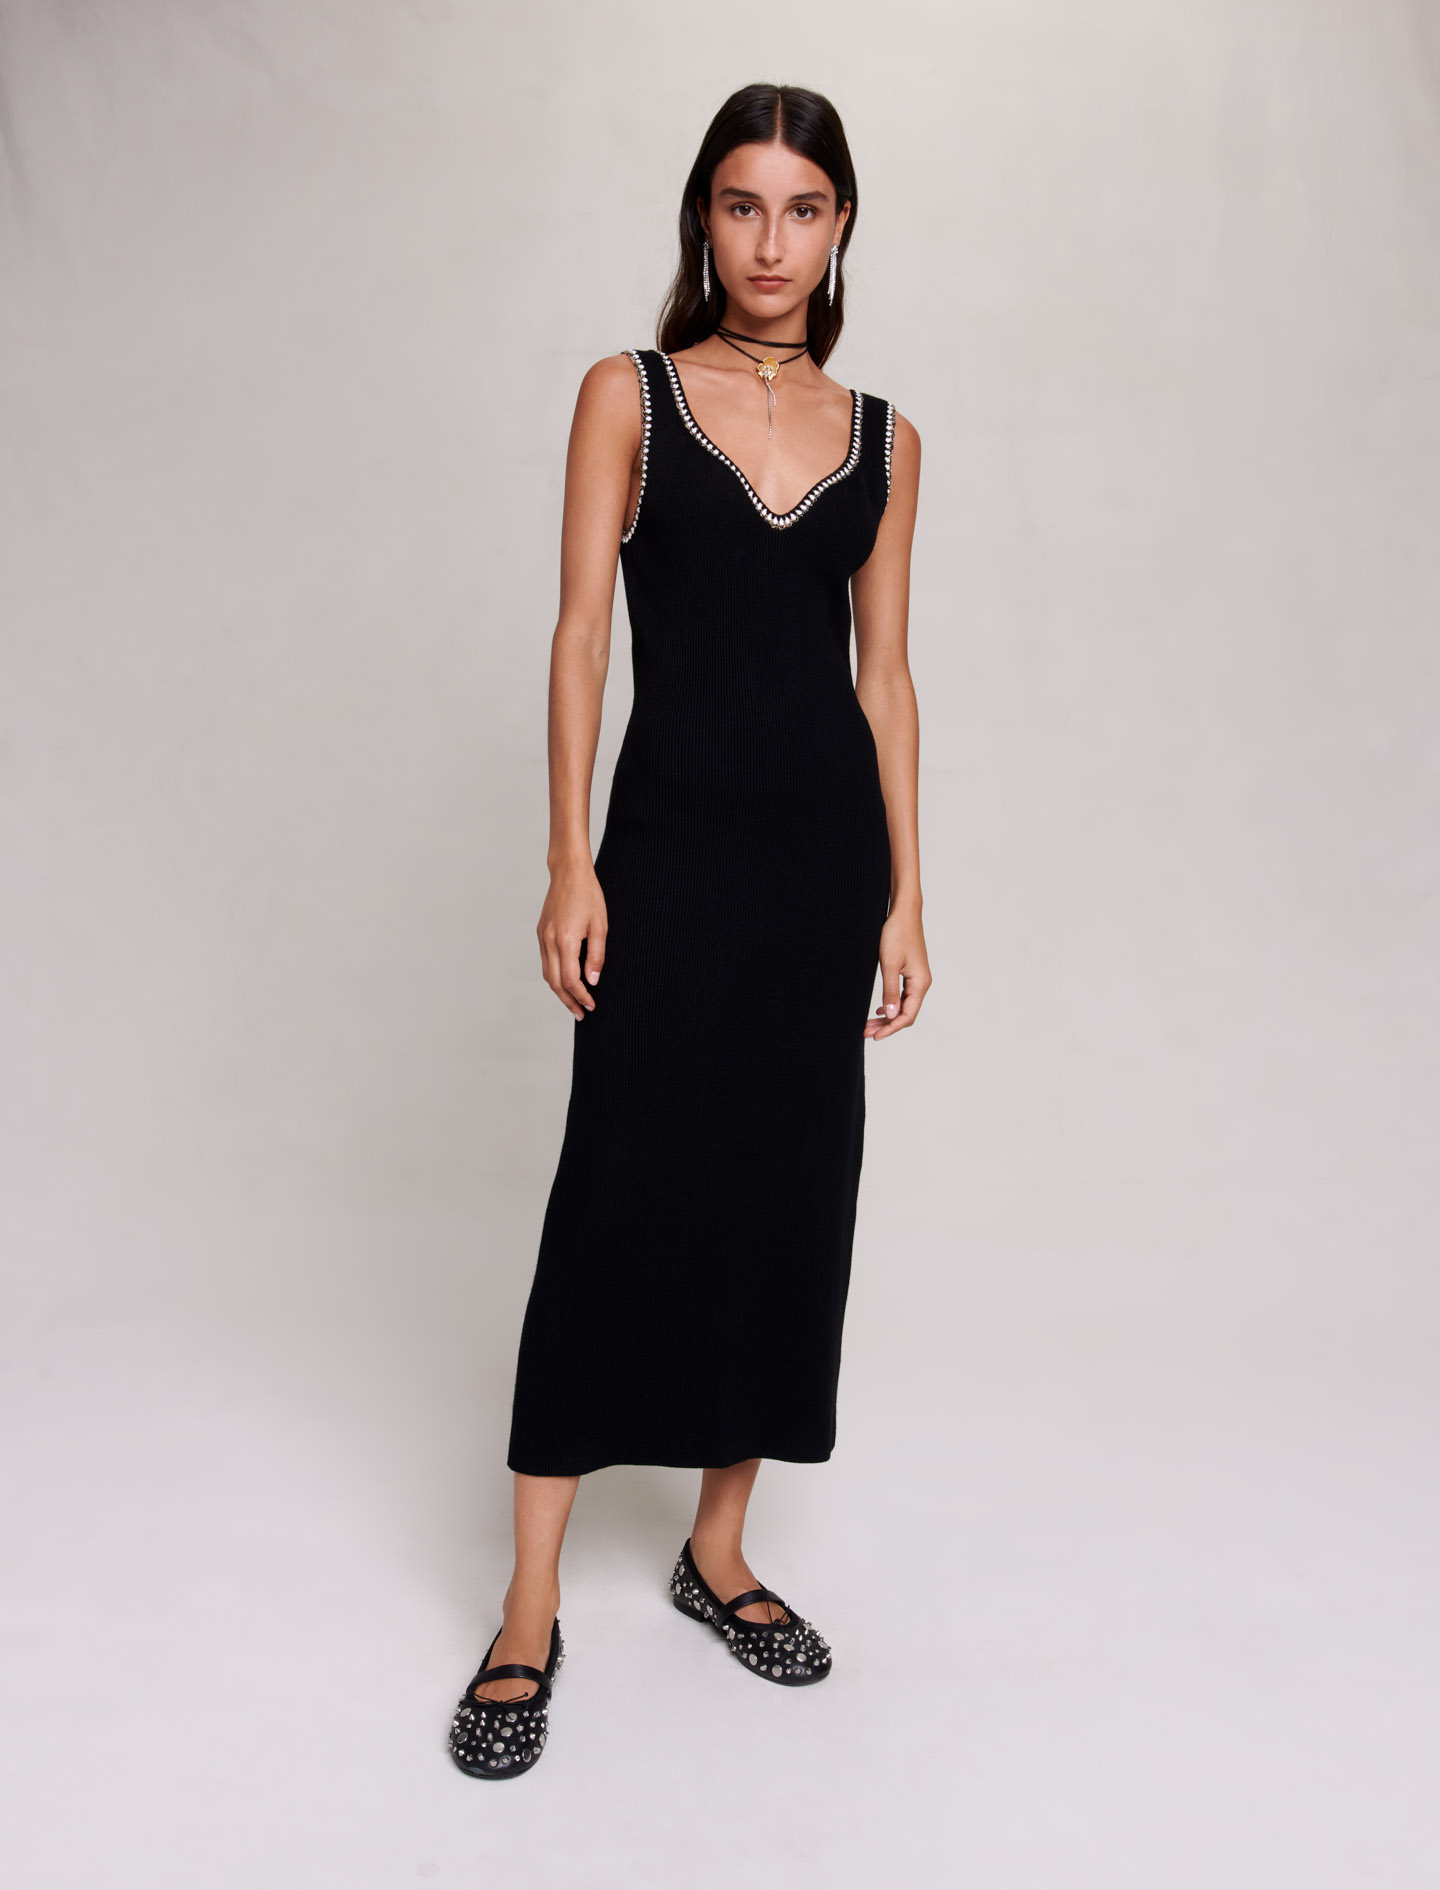 Maje Woman's viscose, Knit maxi dress for Fall/Winter, in color Black / Black